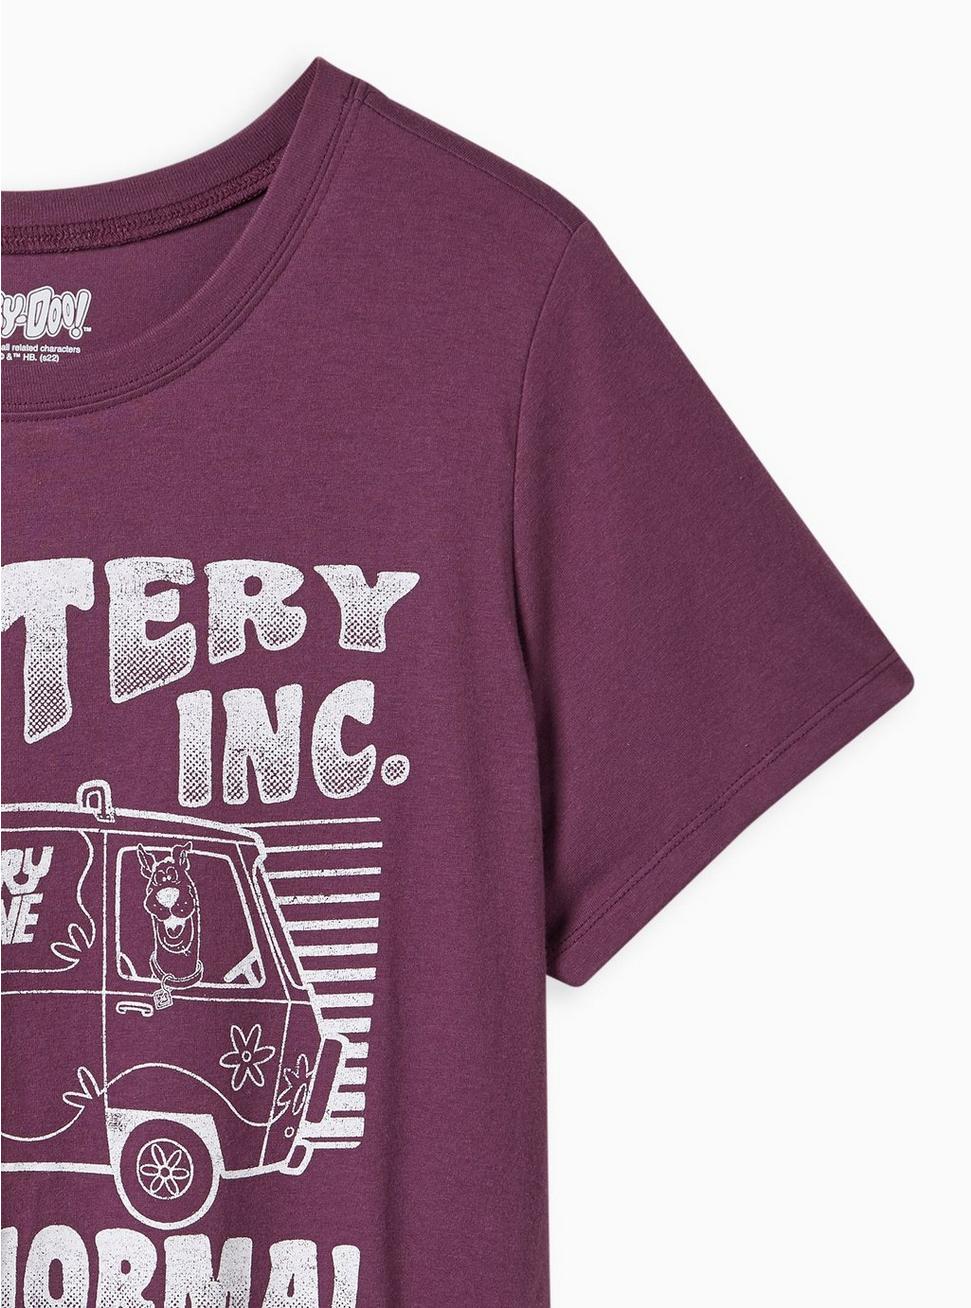 Plus Size Classic Fit Crew Tee - Cotton Scooby Doo Mystery Machine Purple, PURPLE, alternate